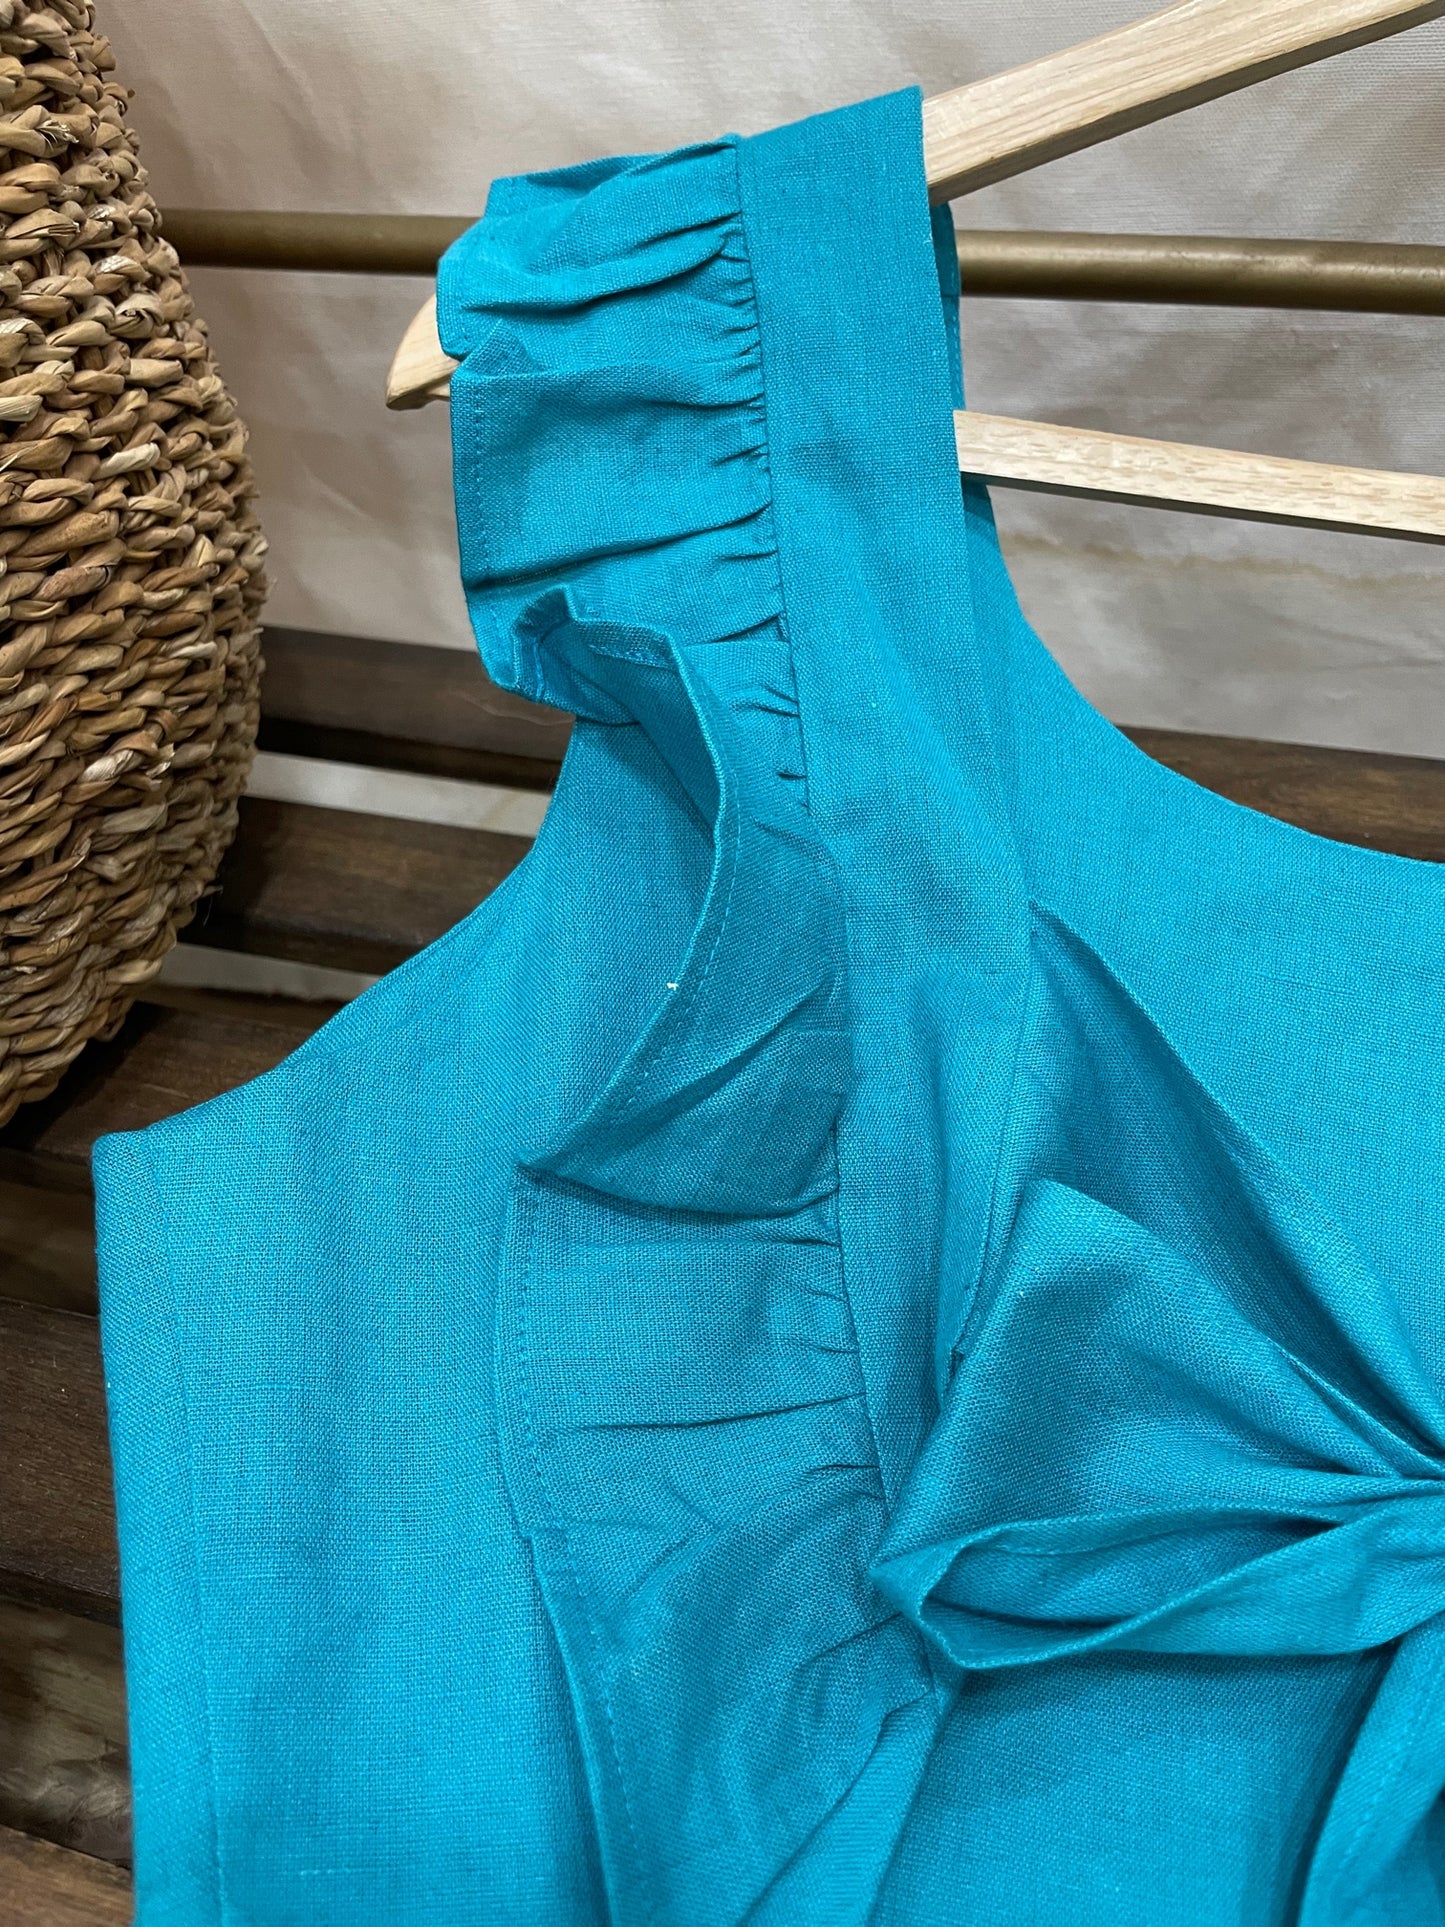 Women's Linen Cotton Teal Brunch Outfits With Ruffle Sleeves-Brunch Dress